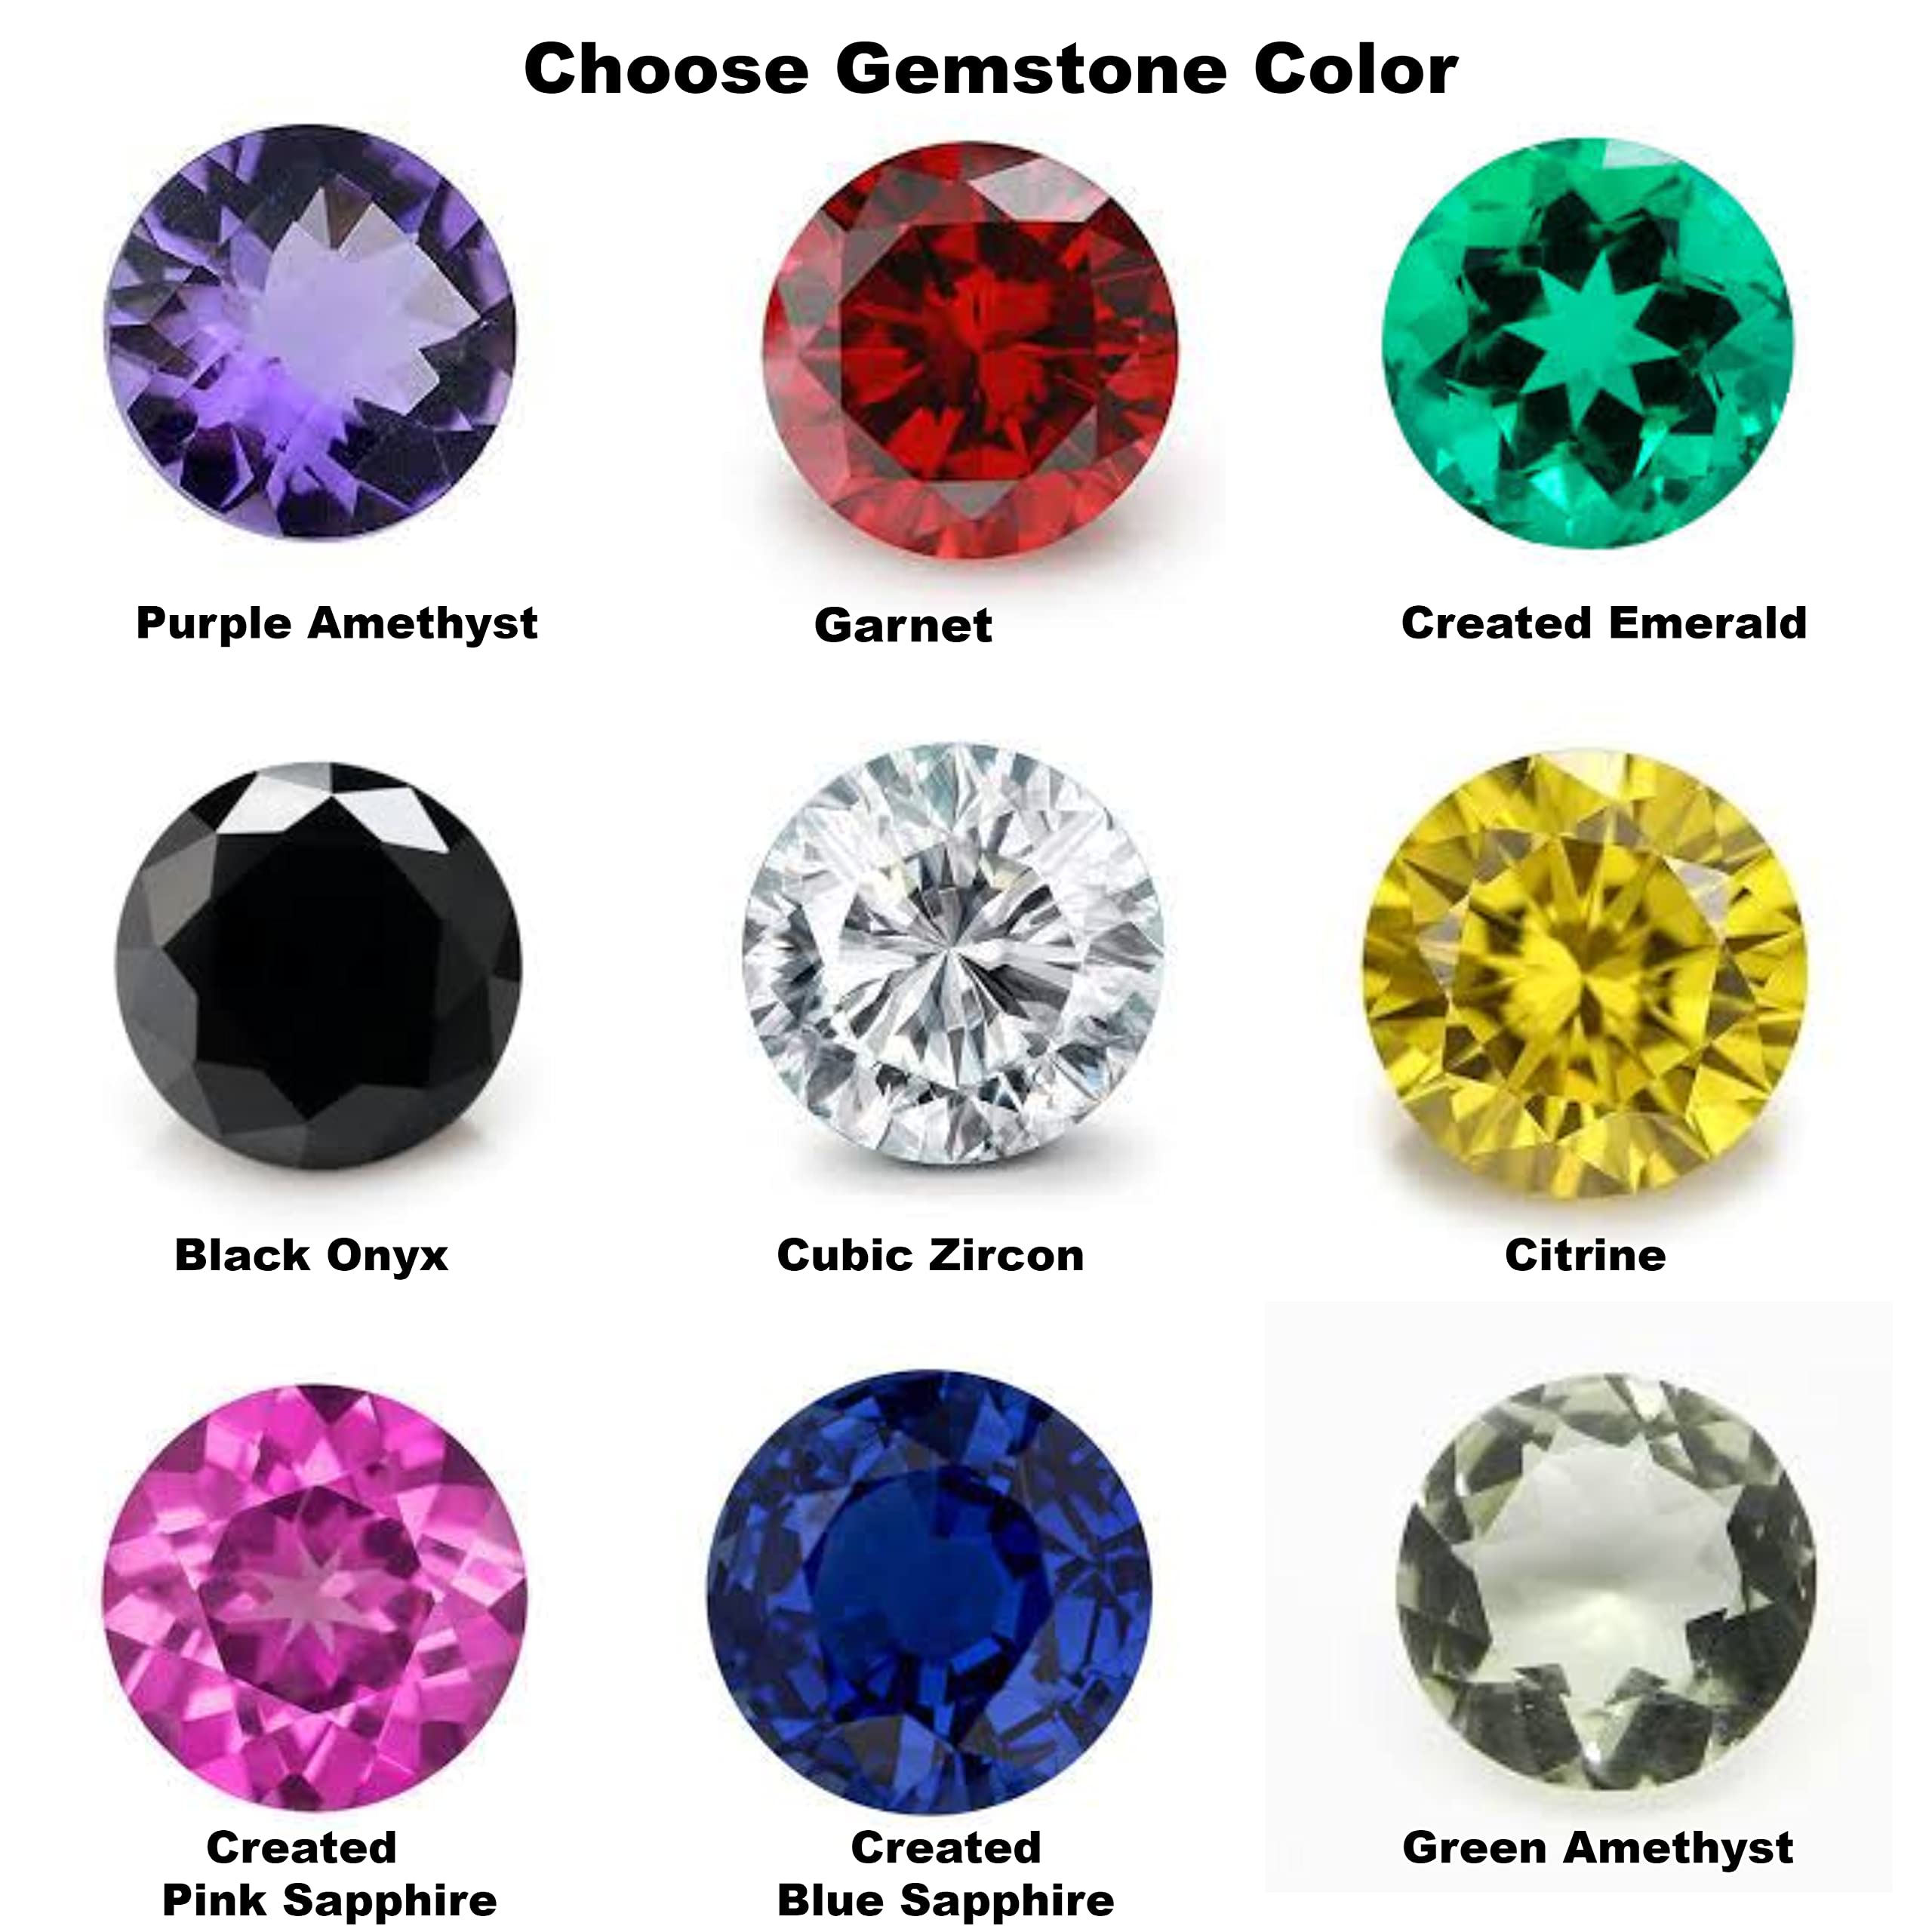 55Carat Choose Your Gemstone Adjustable 18K Gold Plated Ring 5 Carat Natural Chakra Healing Astrological Stone